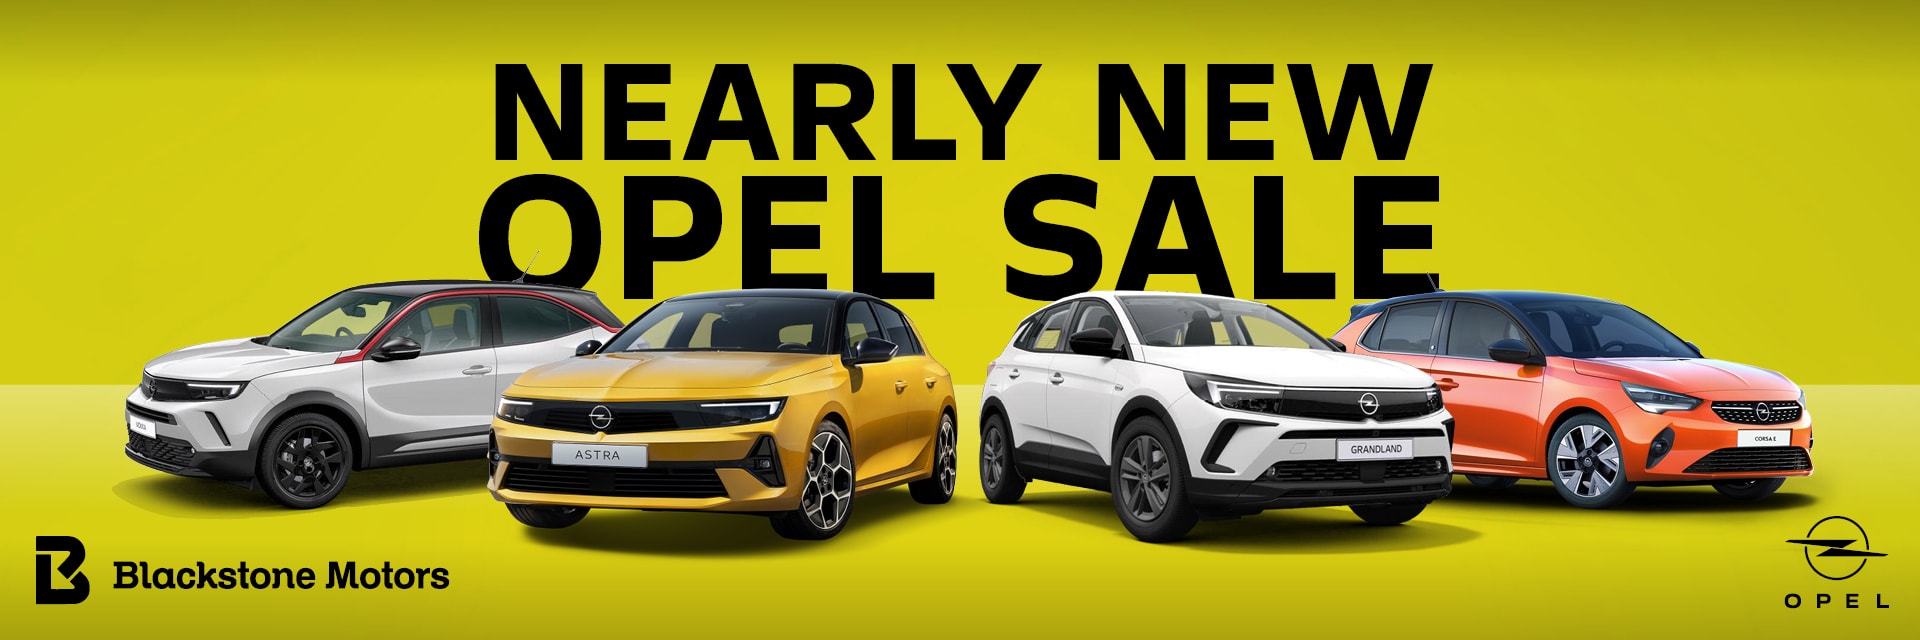 Opel Nearly New